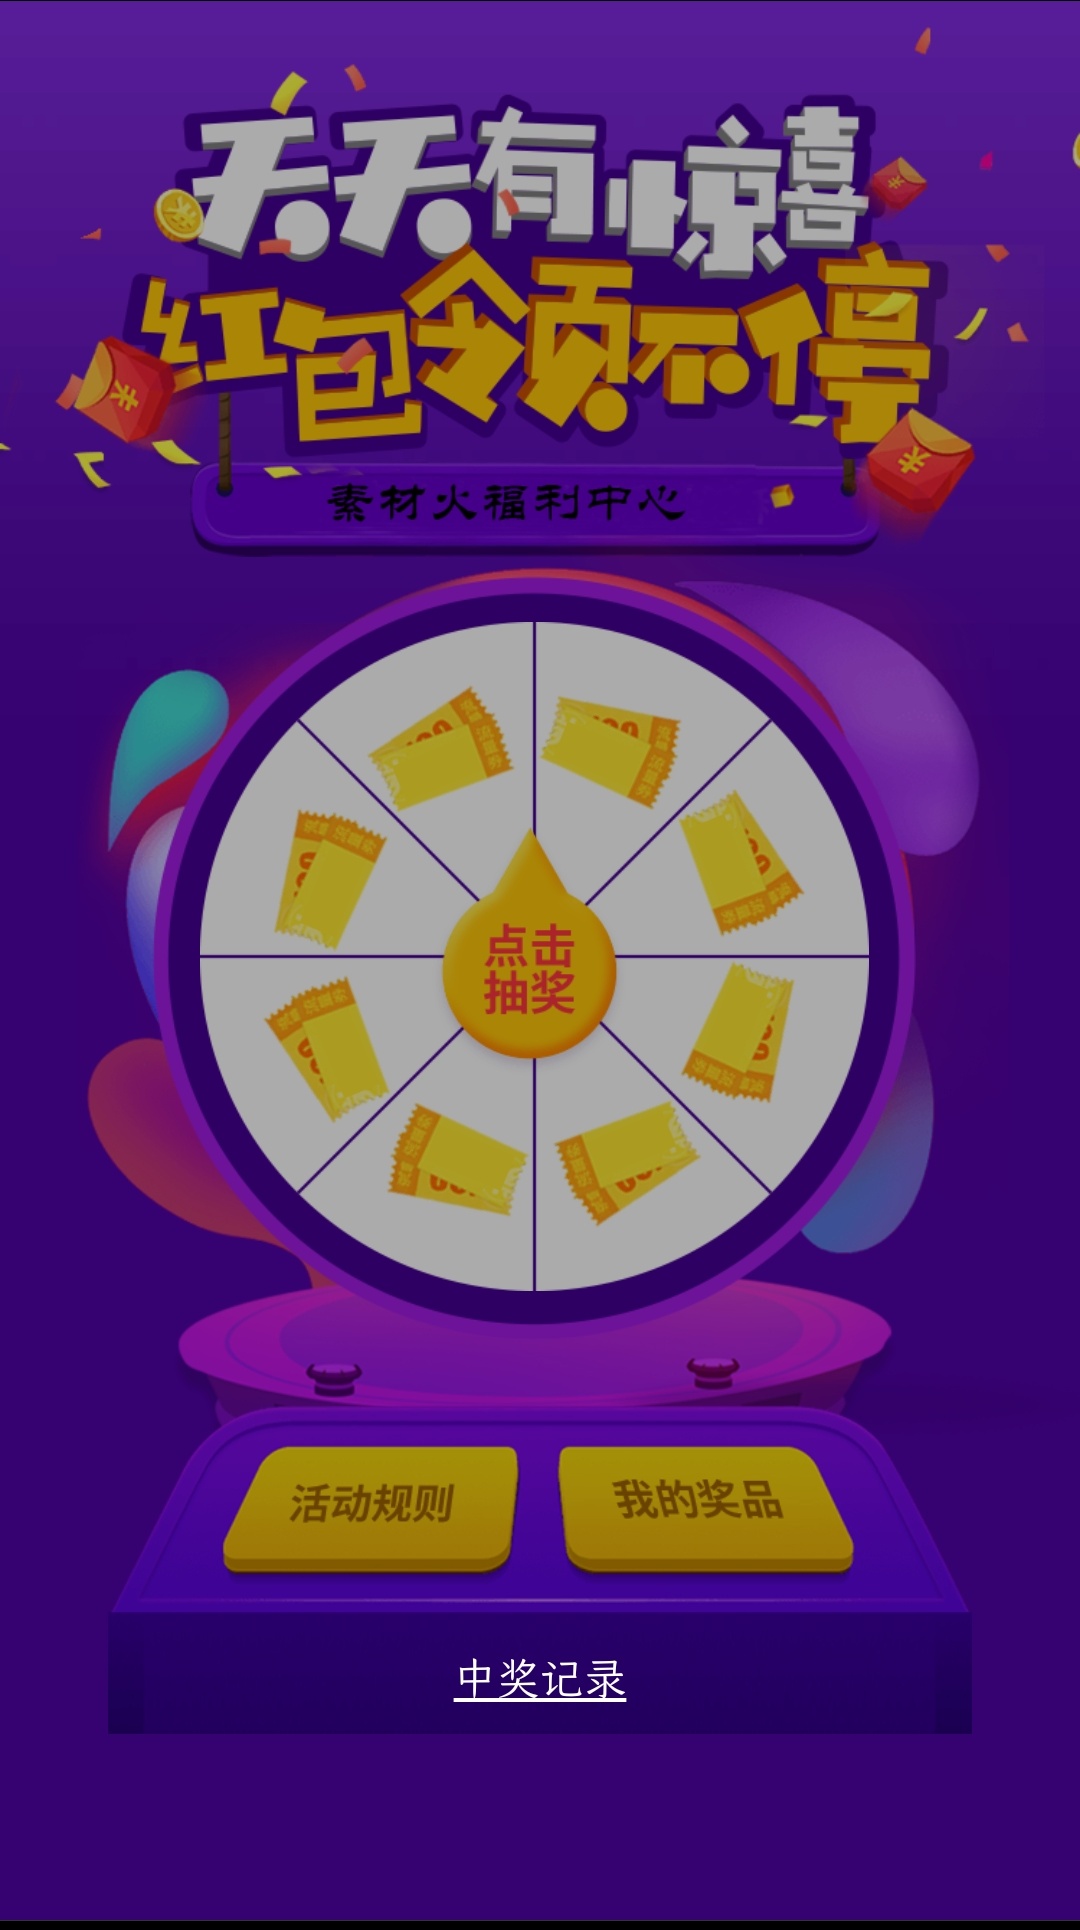 
H5手机转盘抽奖活动游戏页面源码
-安生子-AnSheng
-第1
张图片